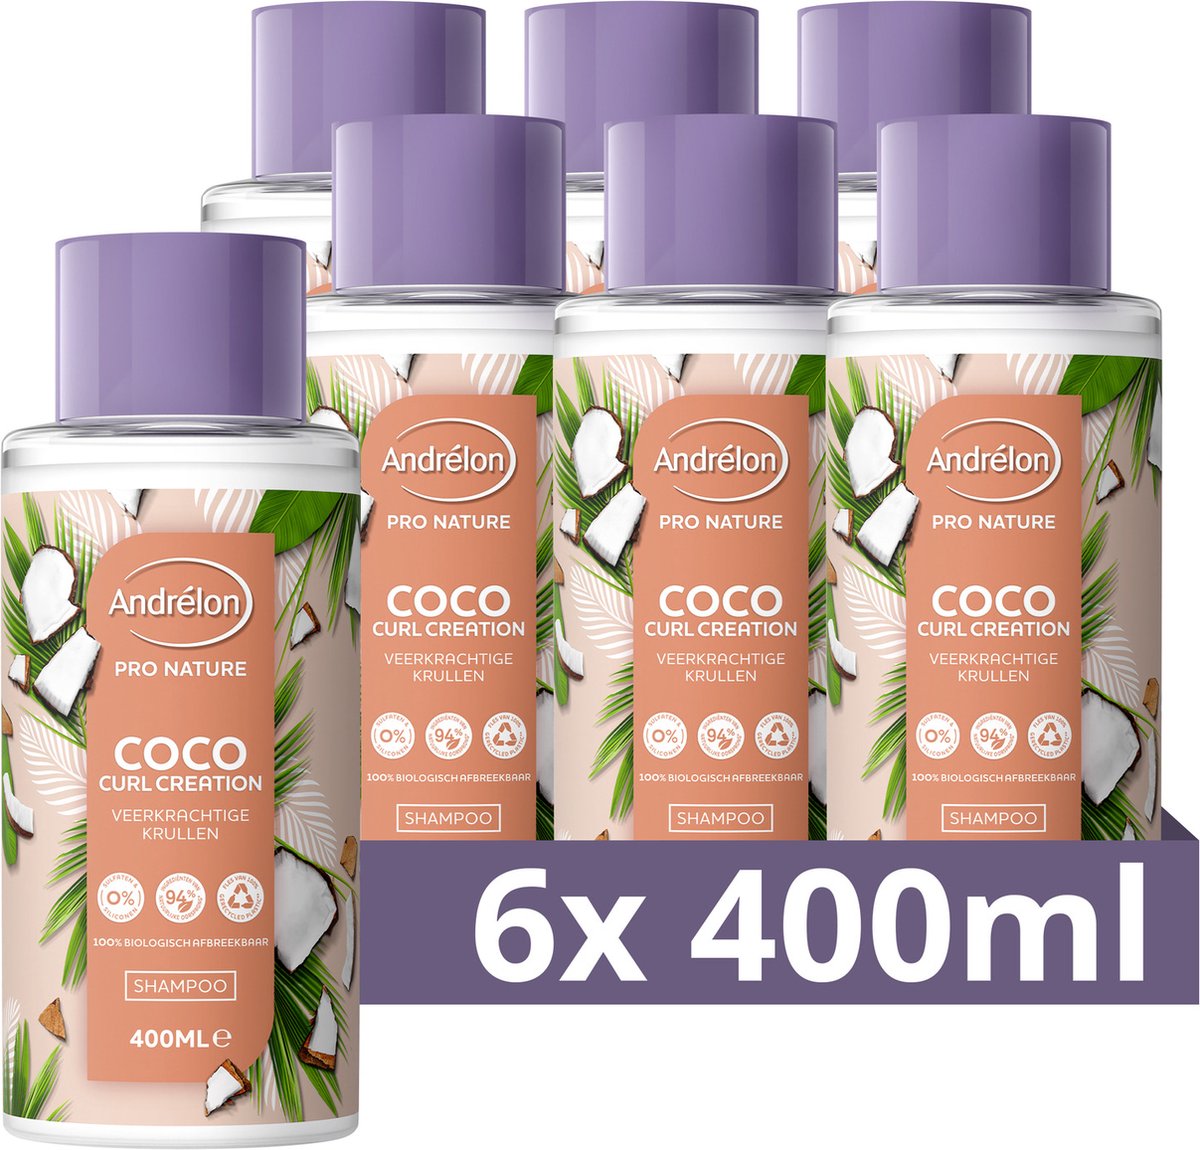 Andrélon Pro Nature Coco Curl Creation Shampoo - 6 x 400 ml - Voordeelverpakking - Andrélon